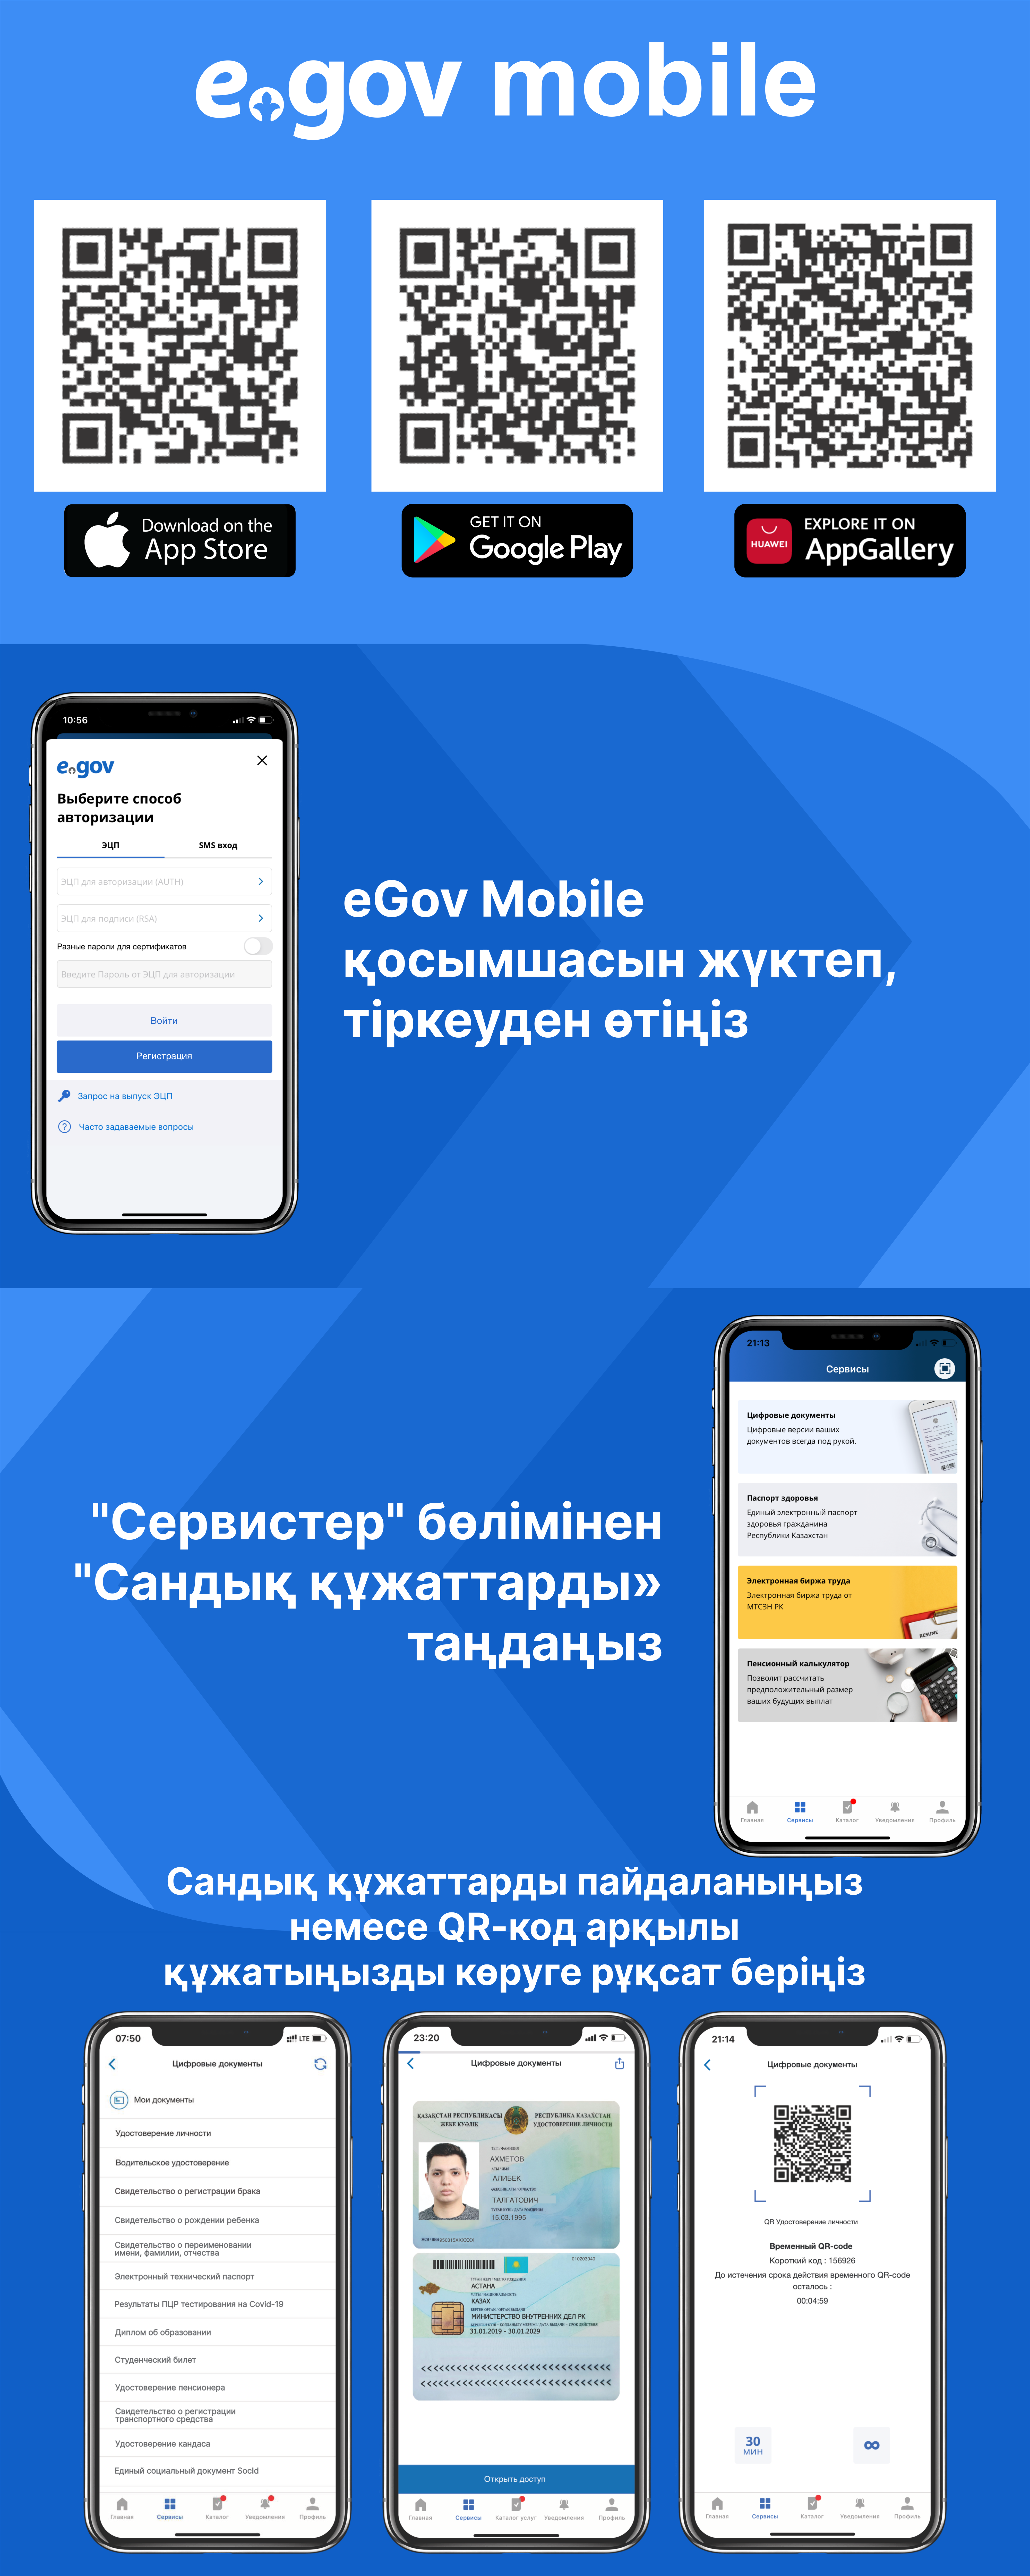 «еGov mobile»